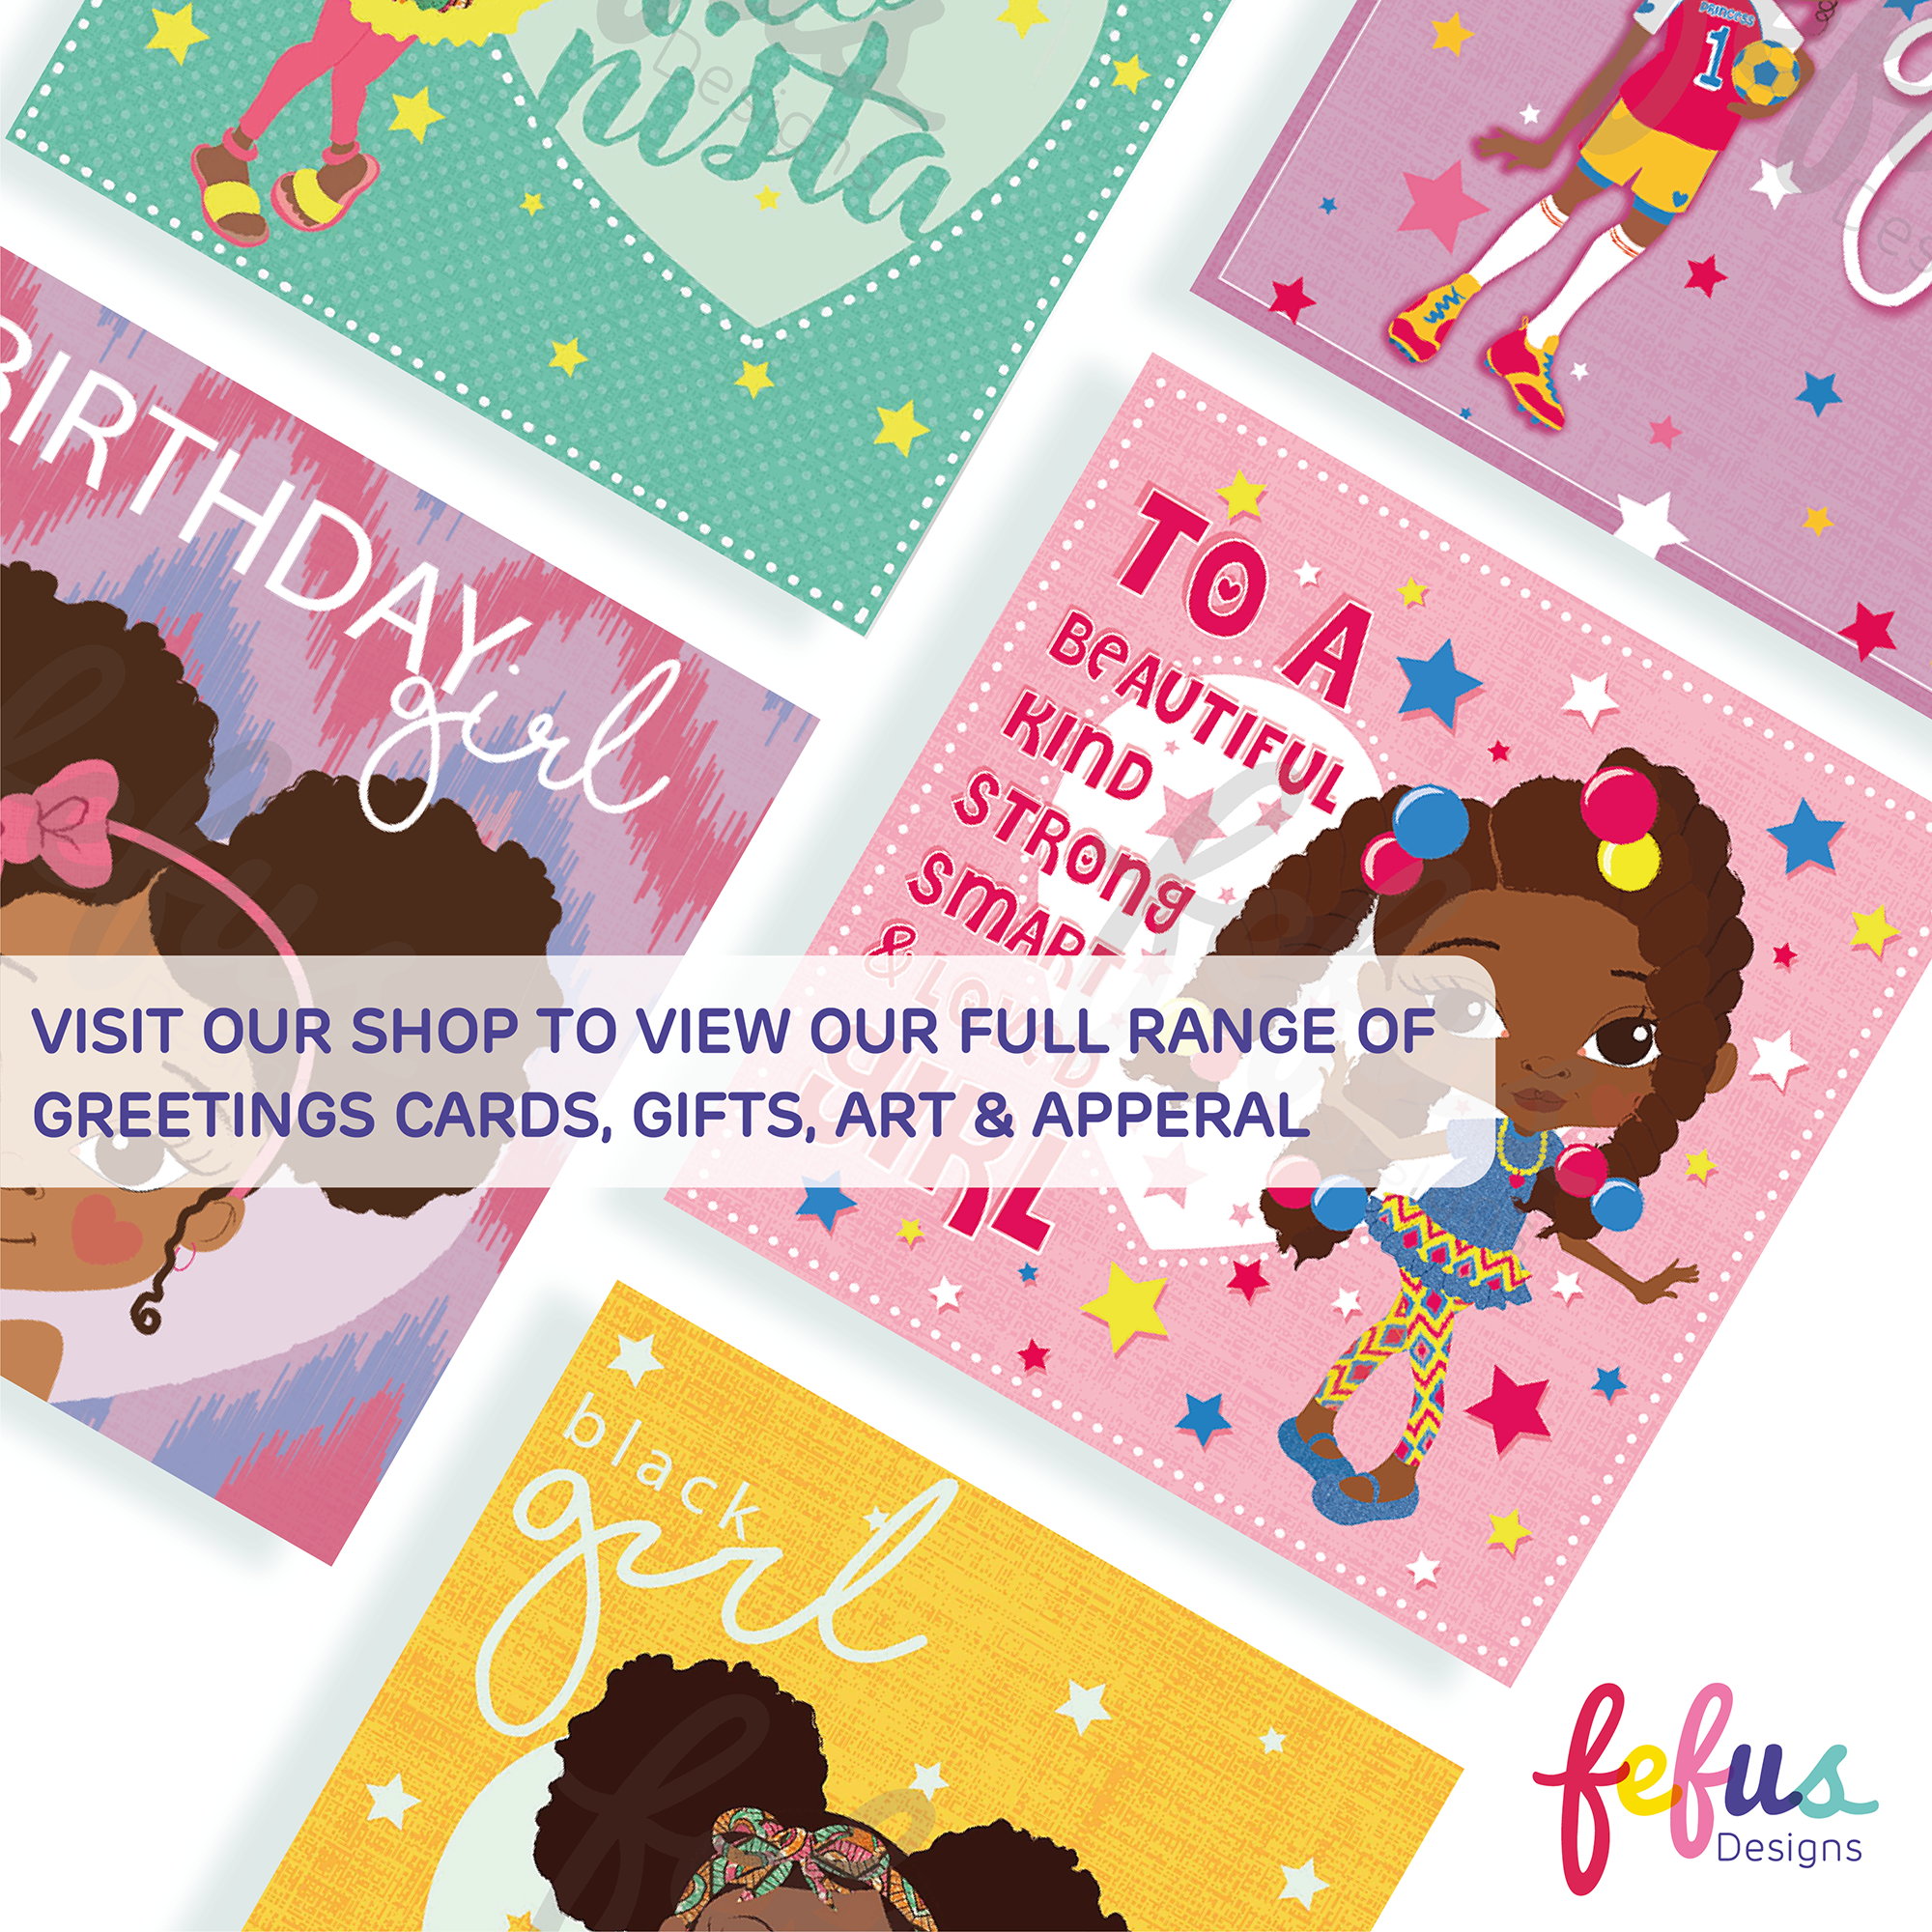 Kadija - Afronista PUFF GIRL - Black Kids Greetings Card | Fefus designs